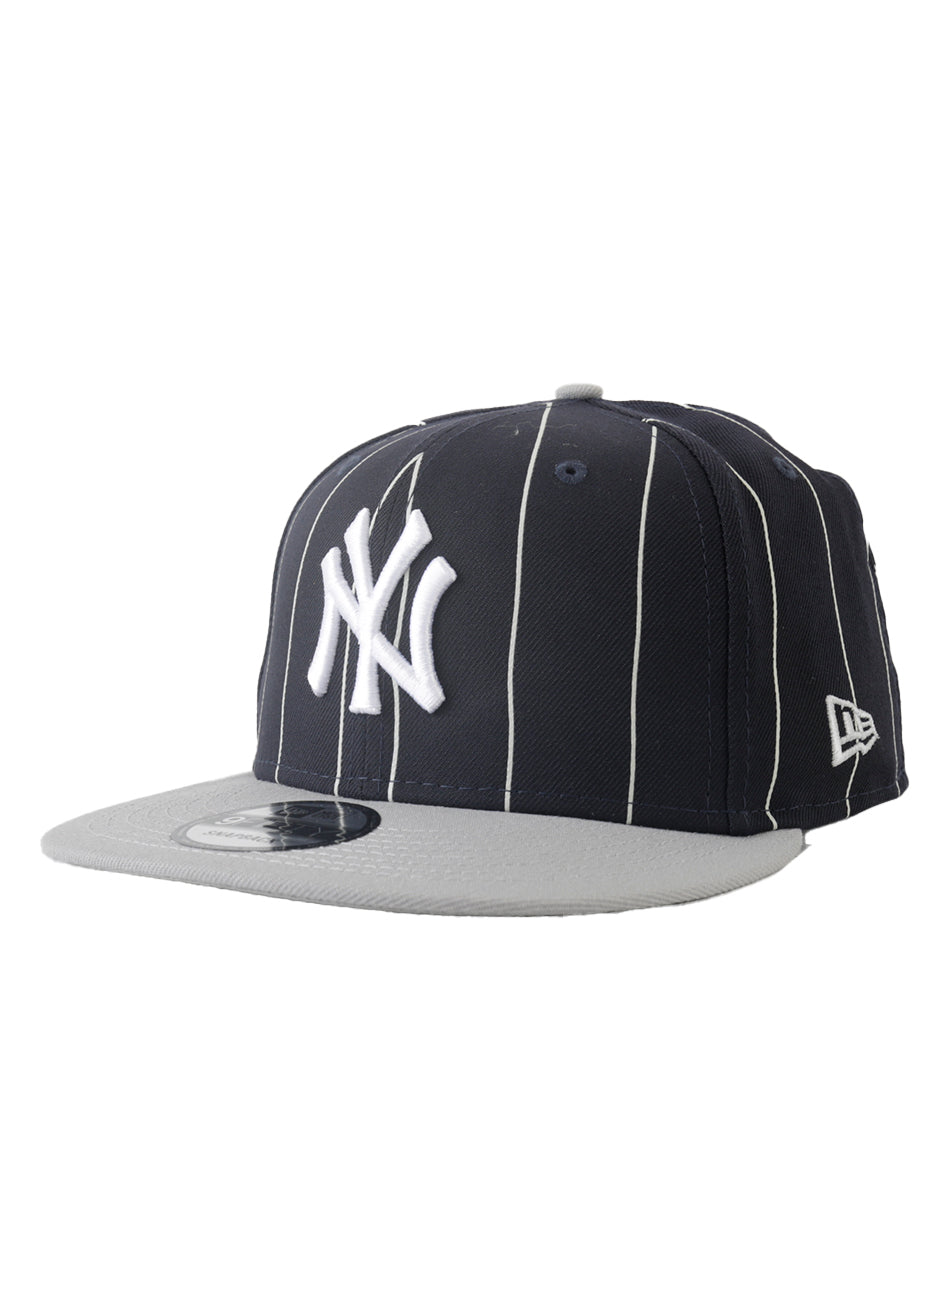 NY Yankees Vintage Pinstripe OTC 950 Snap-Back Hat - Wide